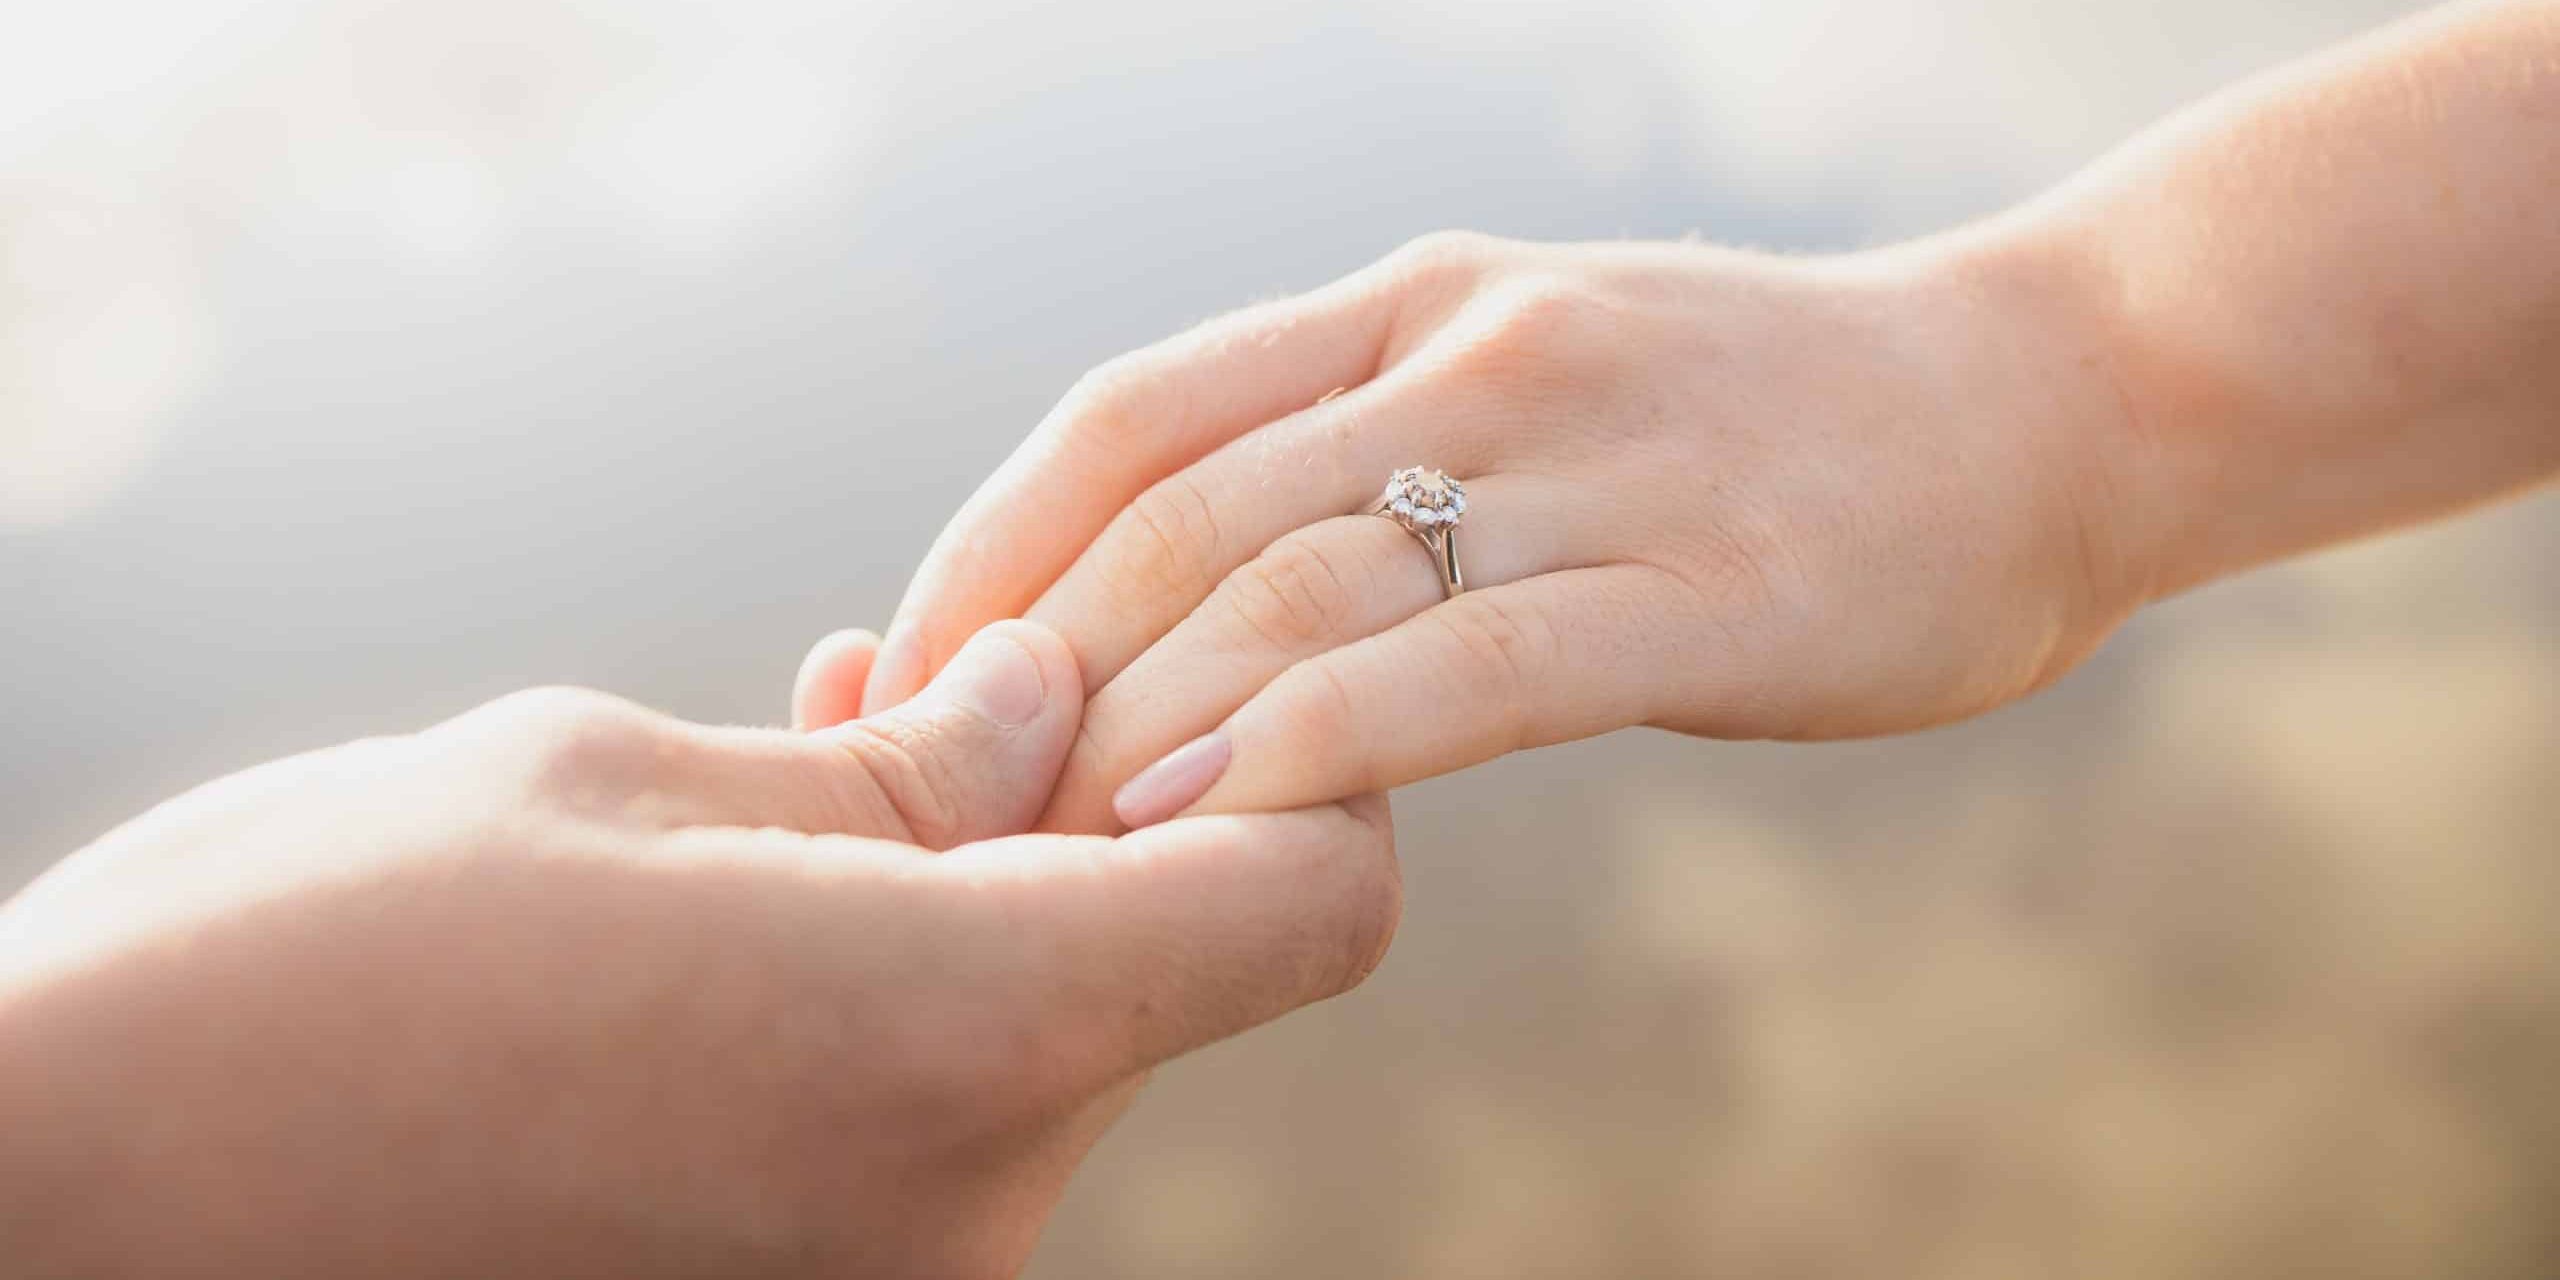 engagement-ring-holding-hands-2021-09-03-16-20-01-utc